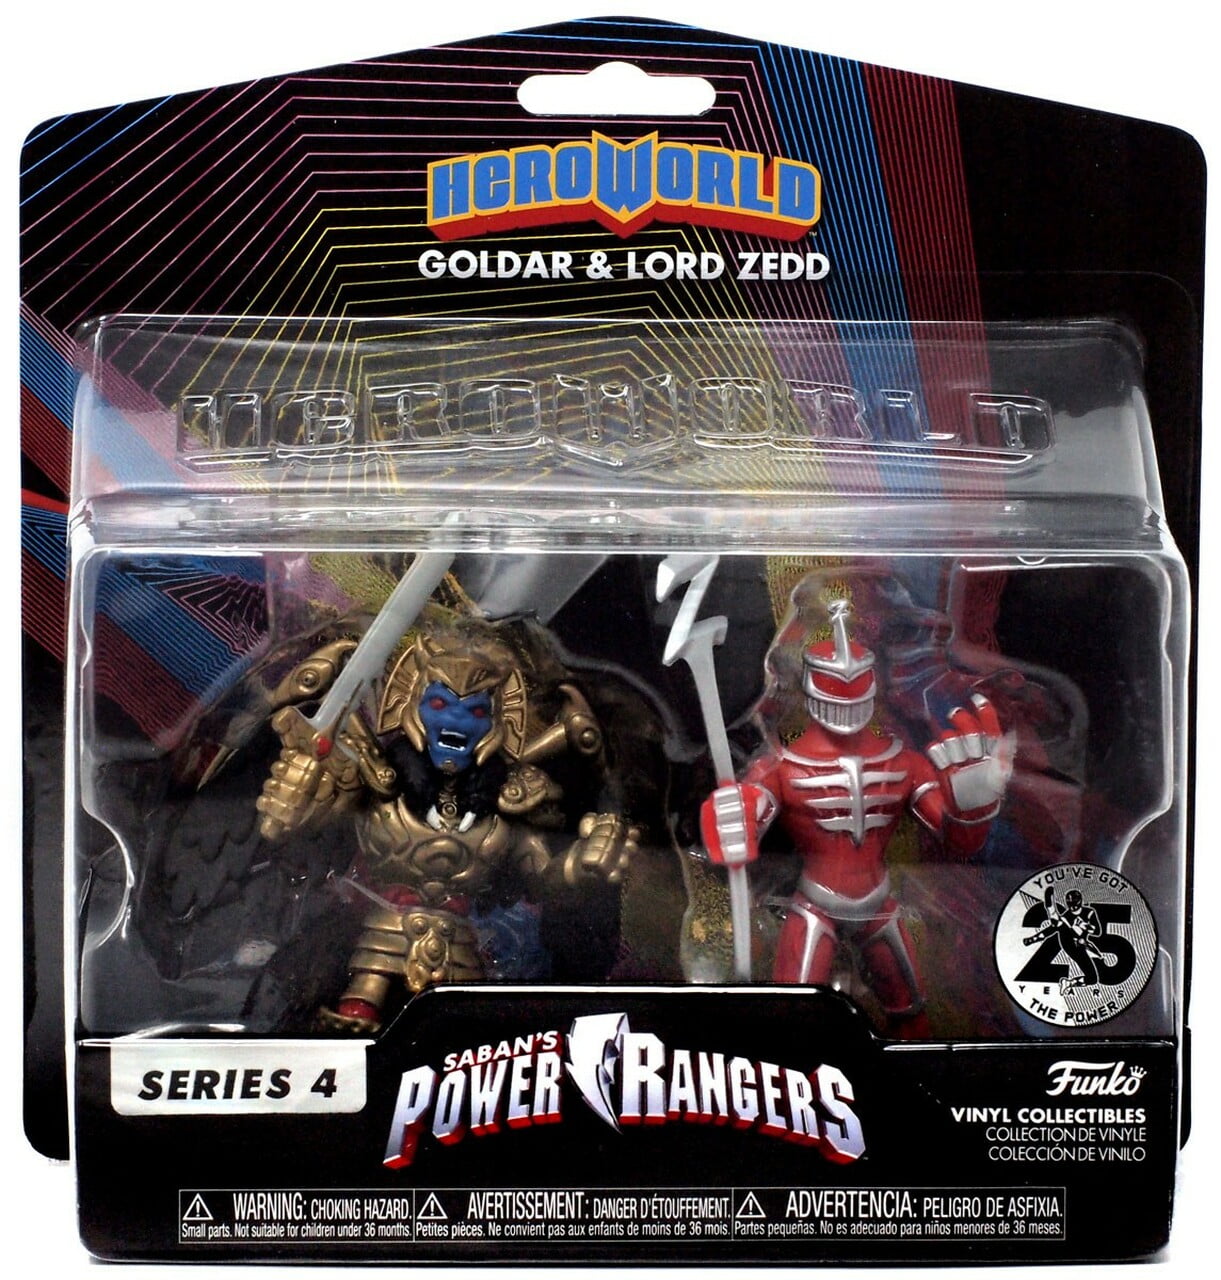 Power Rangers Lord Zedd Funko Pop Vinyl Figure Official Toy Collectables 